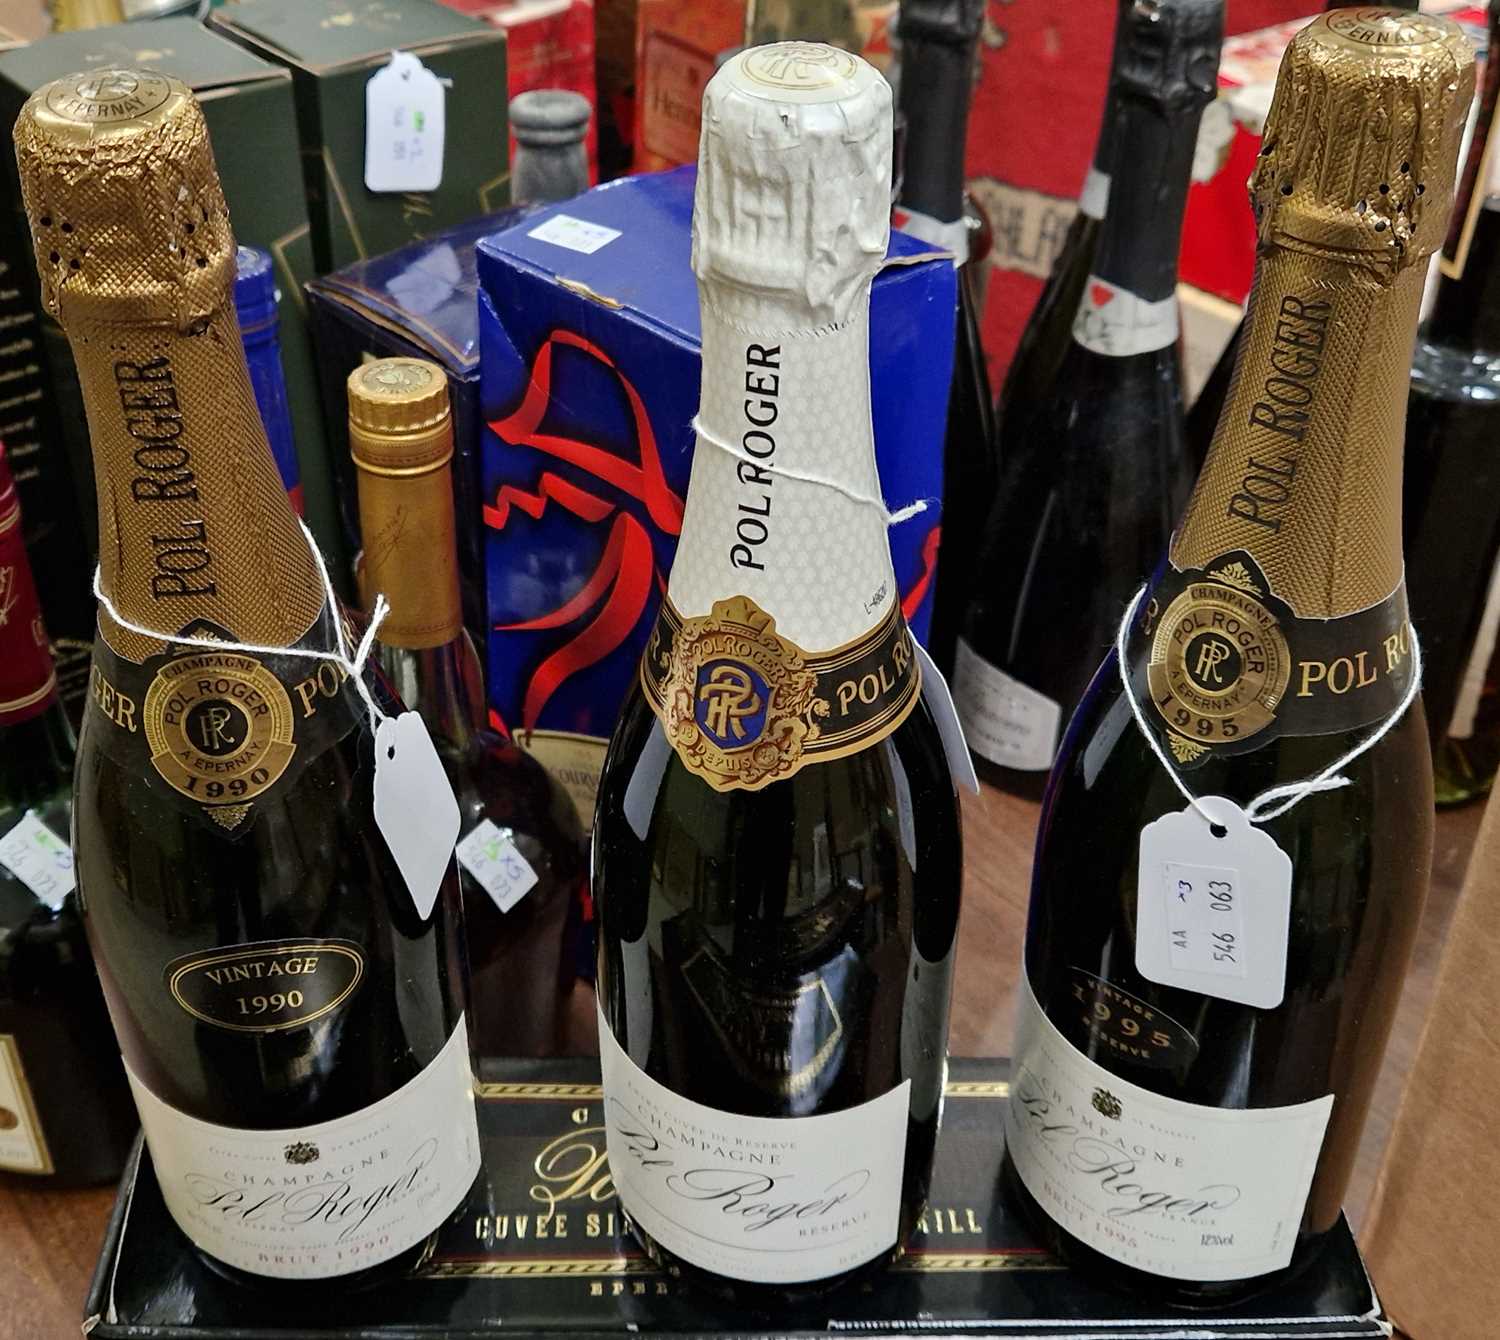 Three bottles, a Pol Roger Champagne Brut 1990 vintage, 750ml, a Pol Roger Champagne Brut 1995